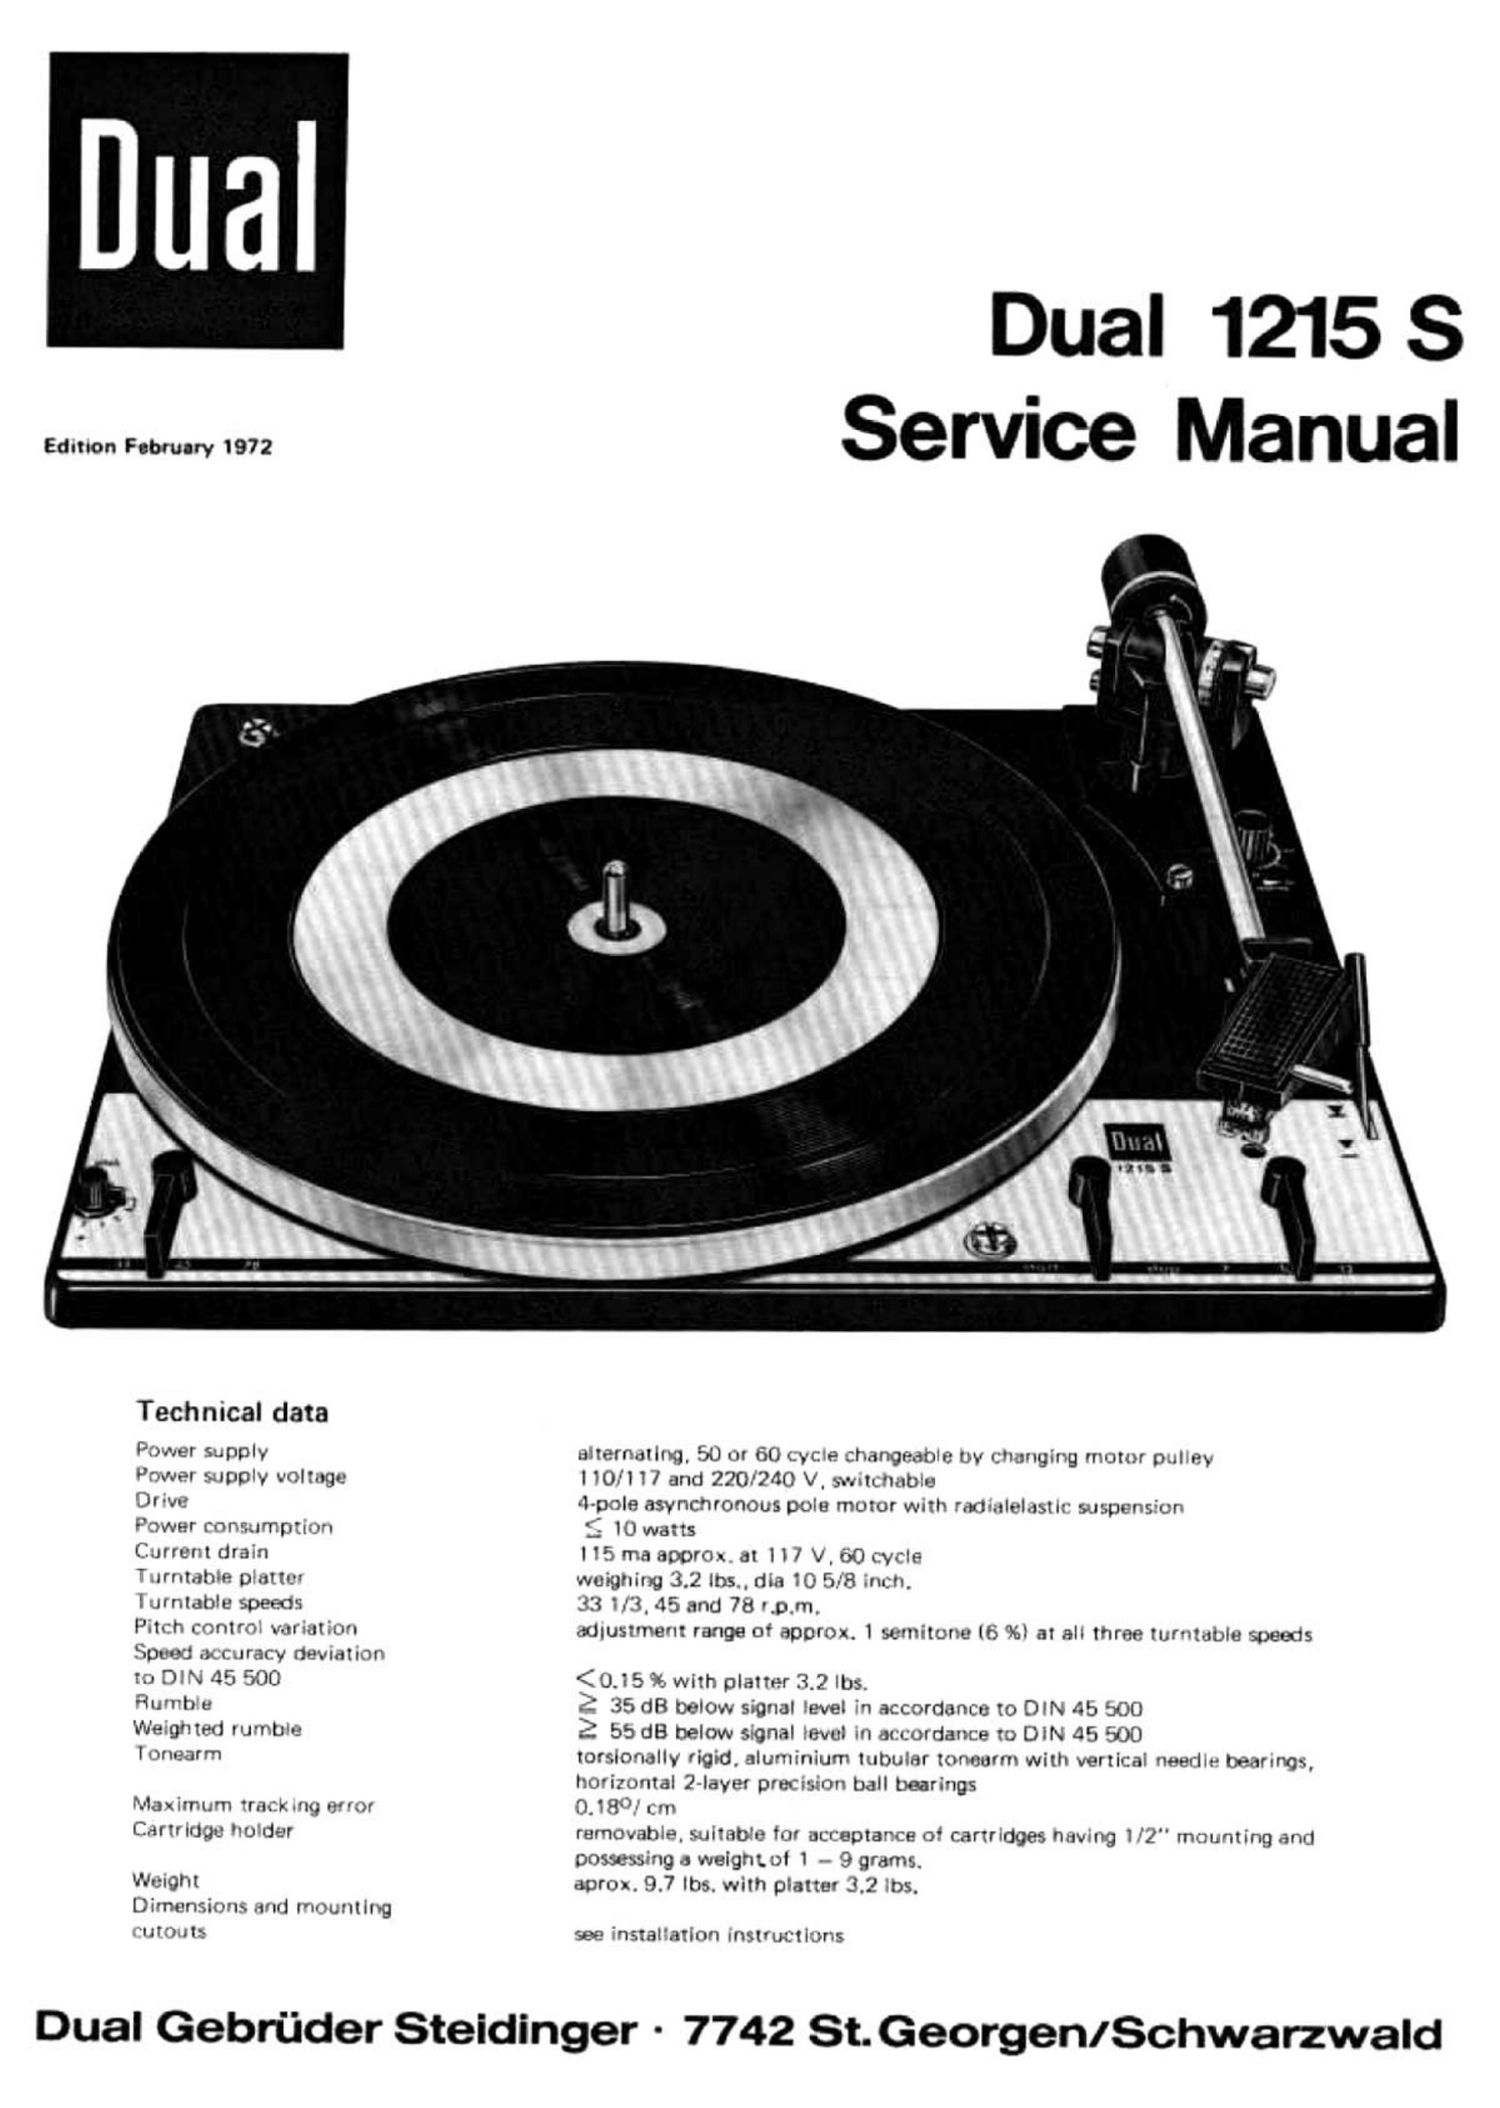 Dual 1215 S Service Manual